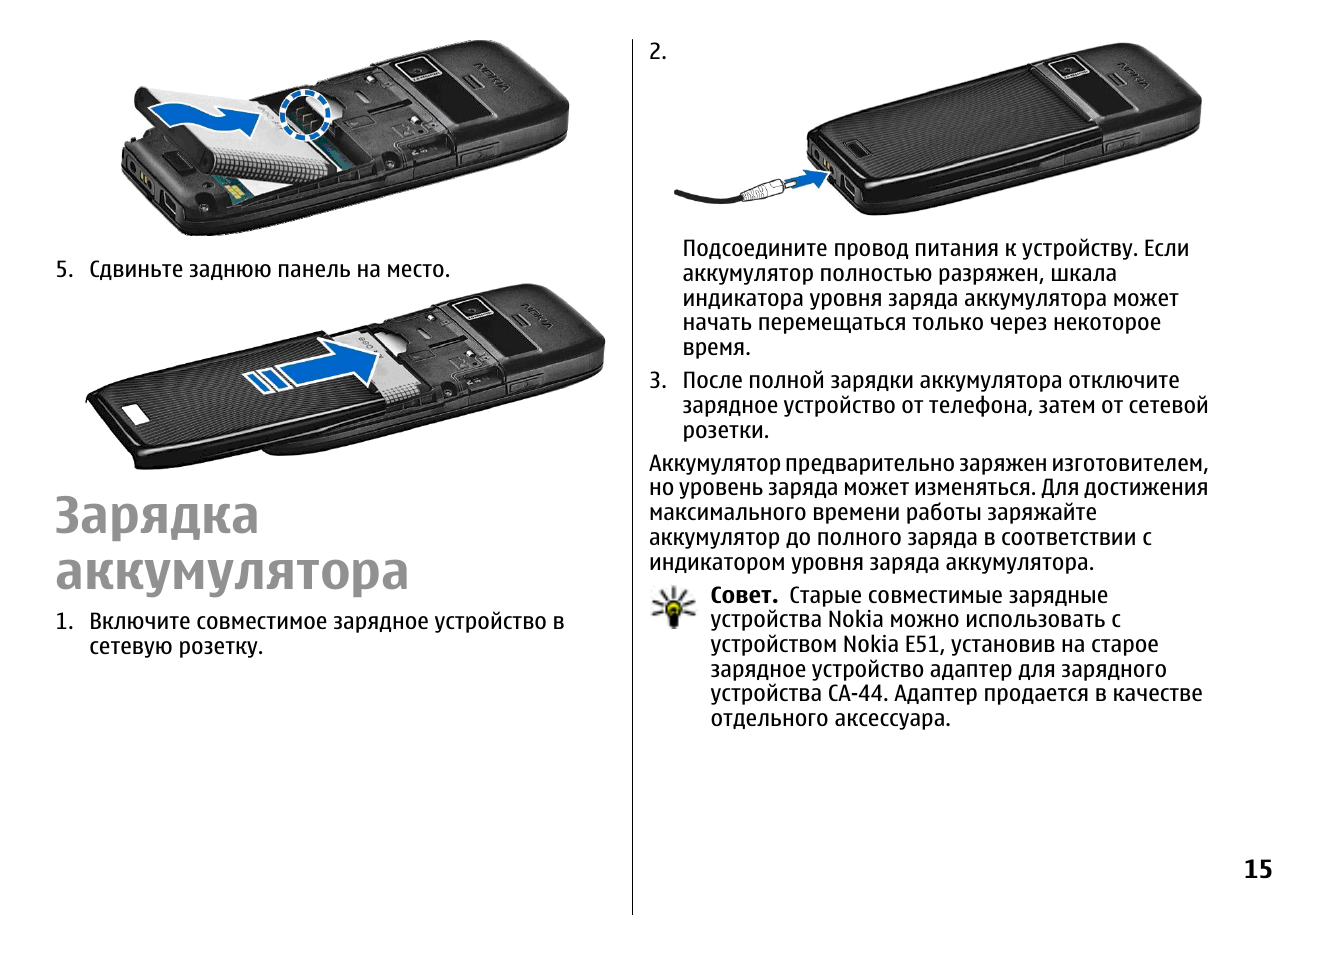 Телефон нокиа устройство. Nokia e51 аккумулятор. Нокиа 100 зарядка аккумулятора. Nokia DT-16 зарядка аккумулятора. Nokia rh 51 зарядка.